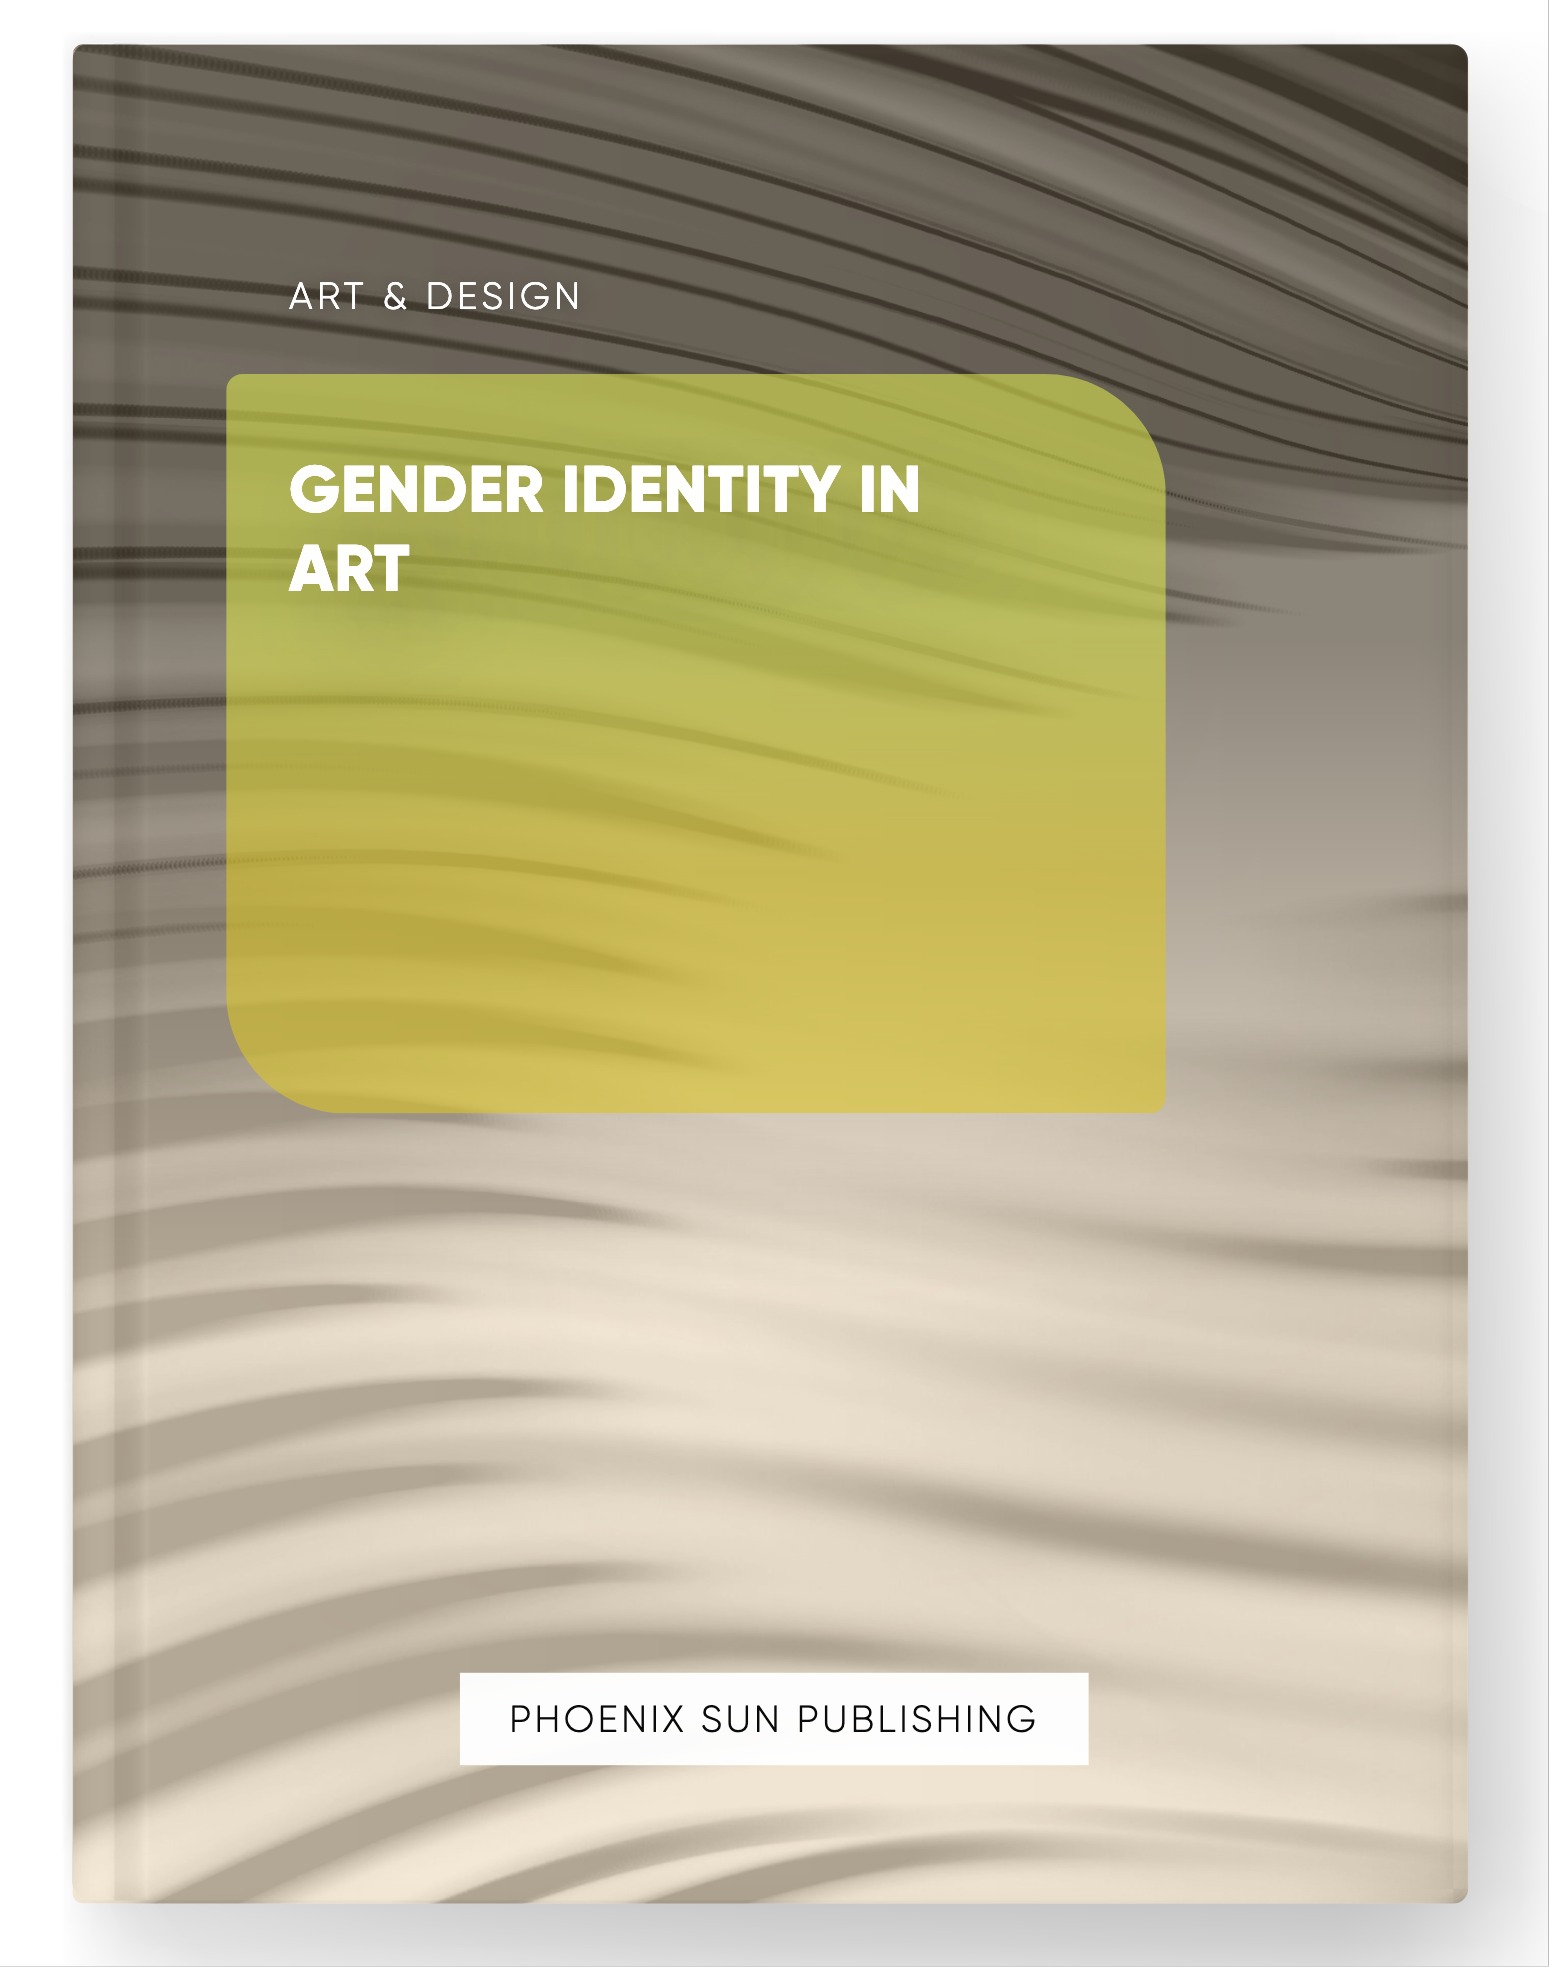 Gender Identity in Art